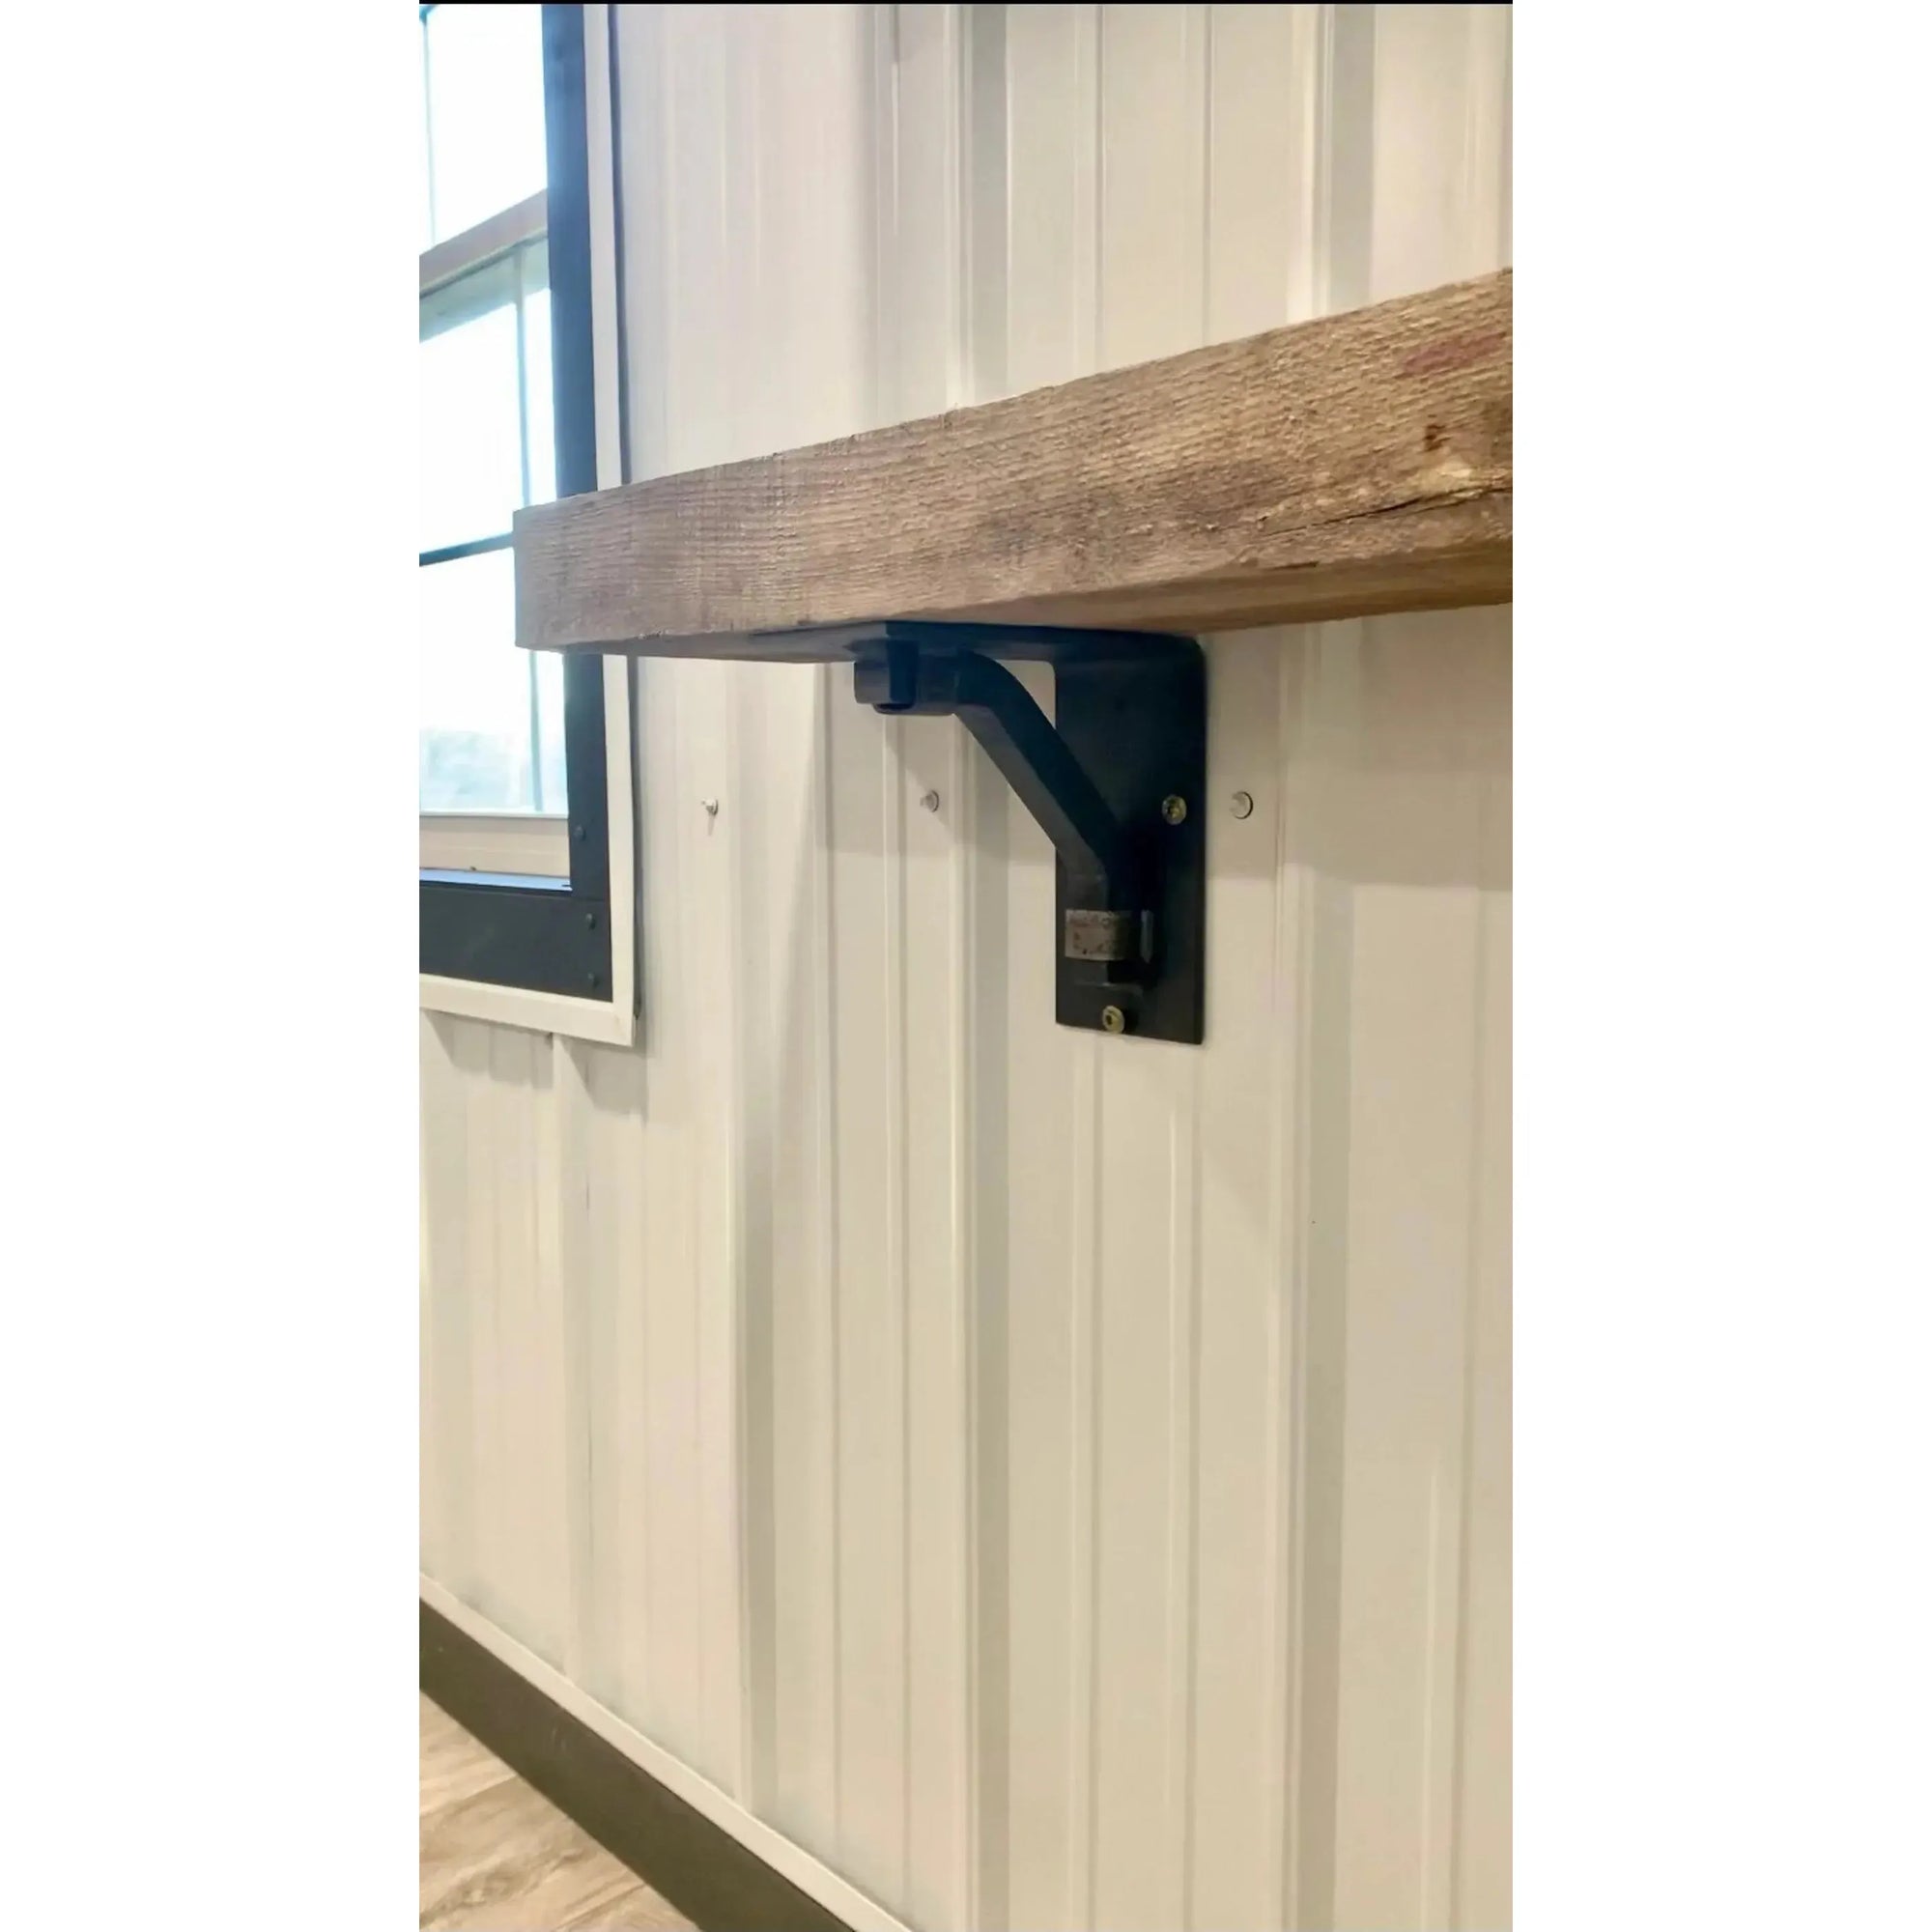 The Rosamond Shelf Supports Shelf Support 5" Depth x 5" Wall Mount Length Finish Black Powder Coat | Industrial Farm Co